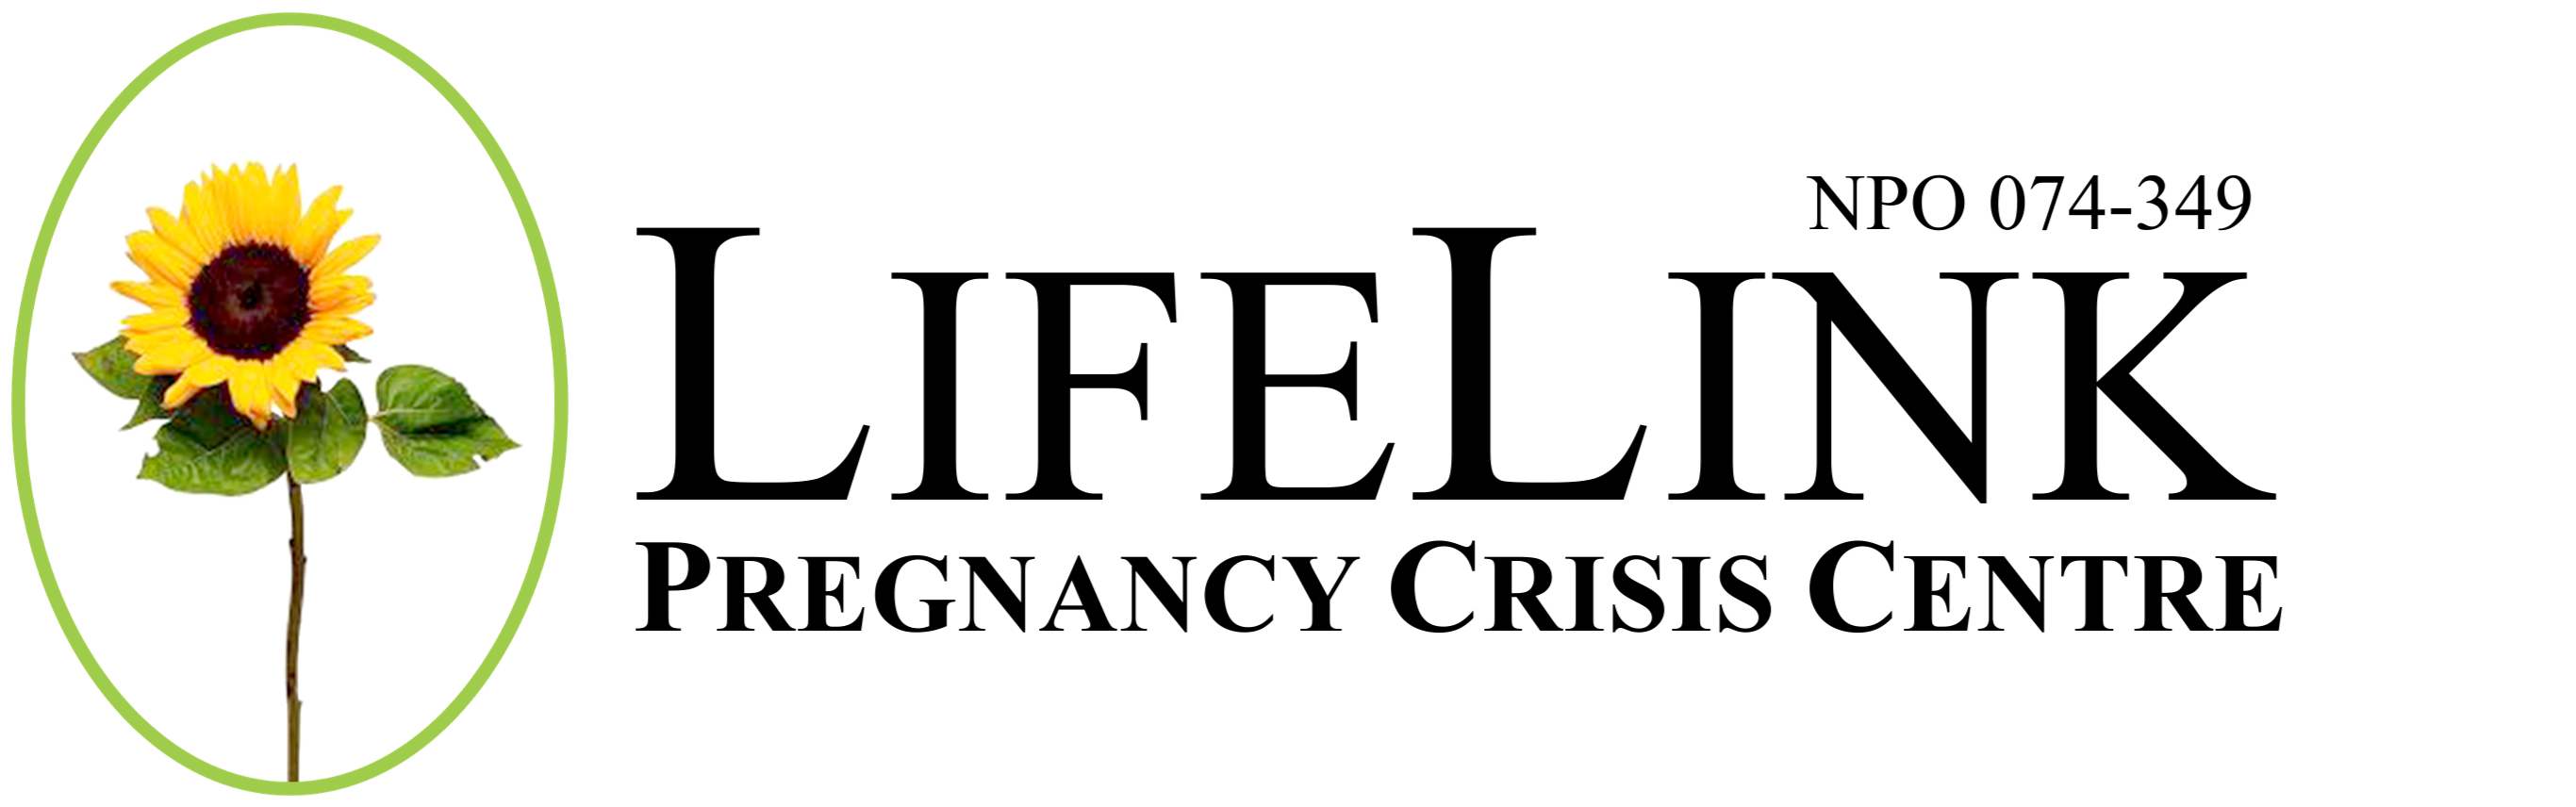 Life Link logo